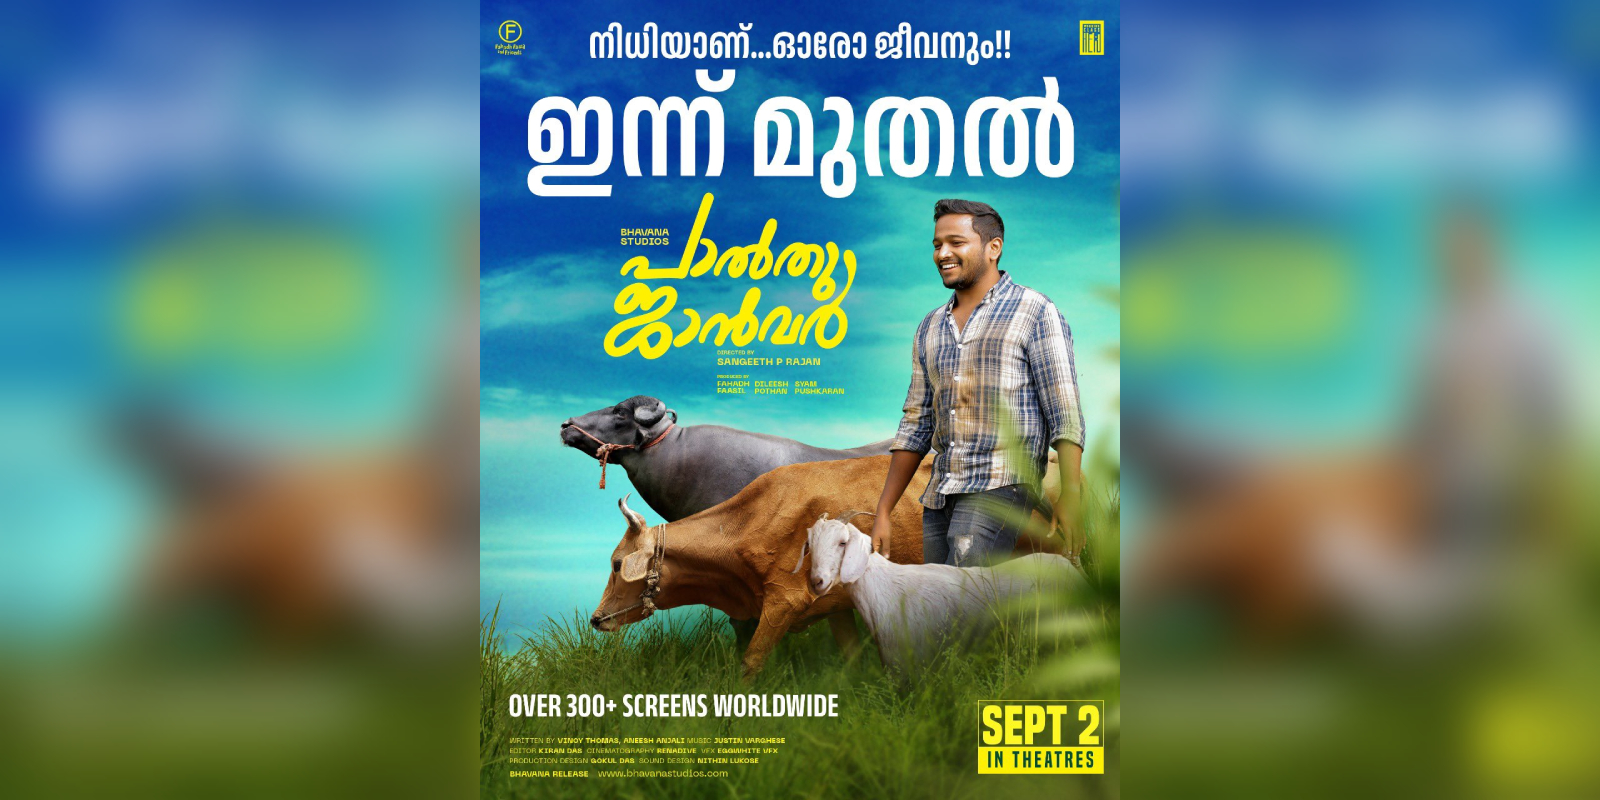 Palthu Janwar Malayalam film review - The South First